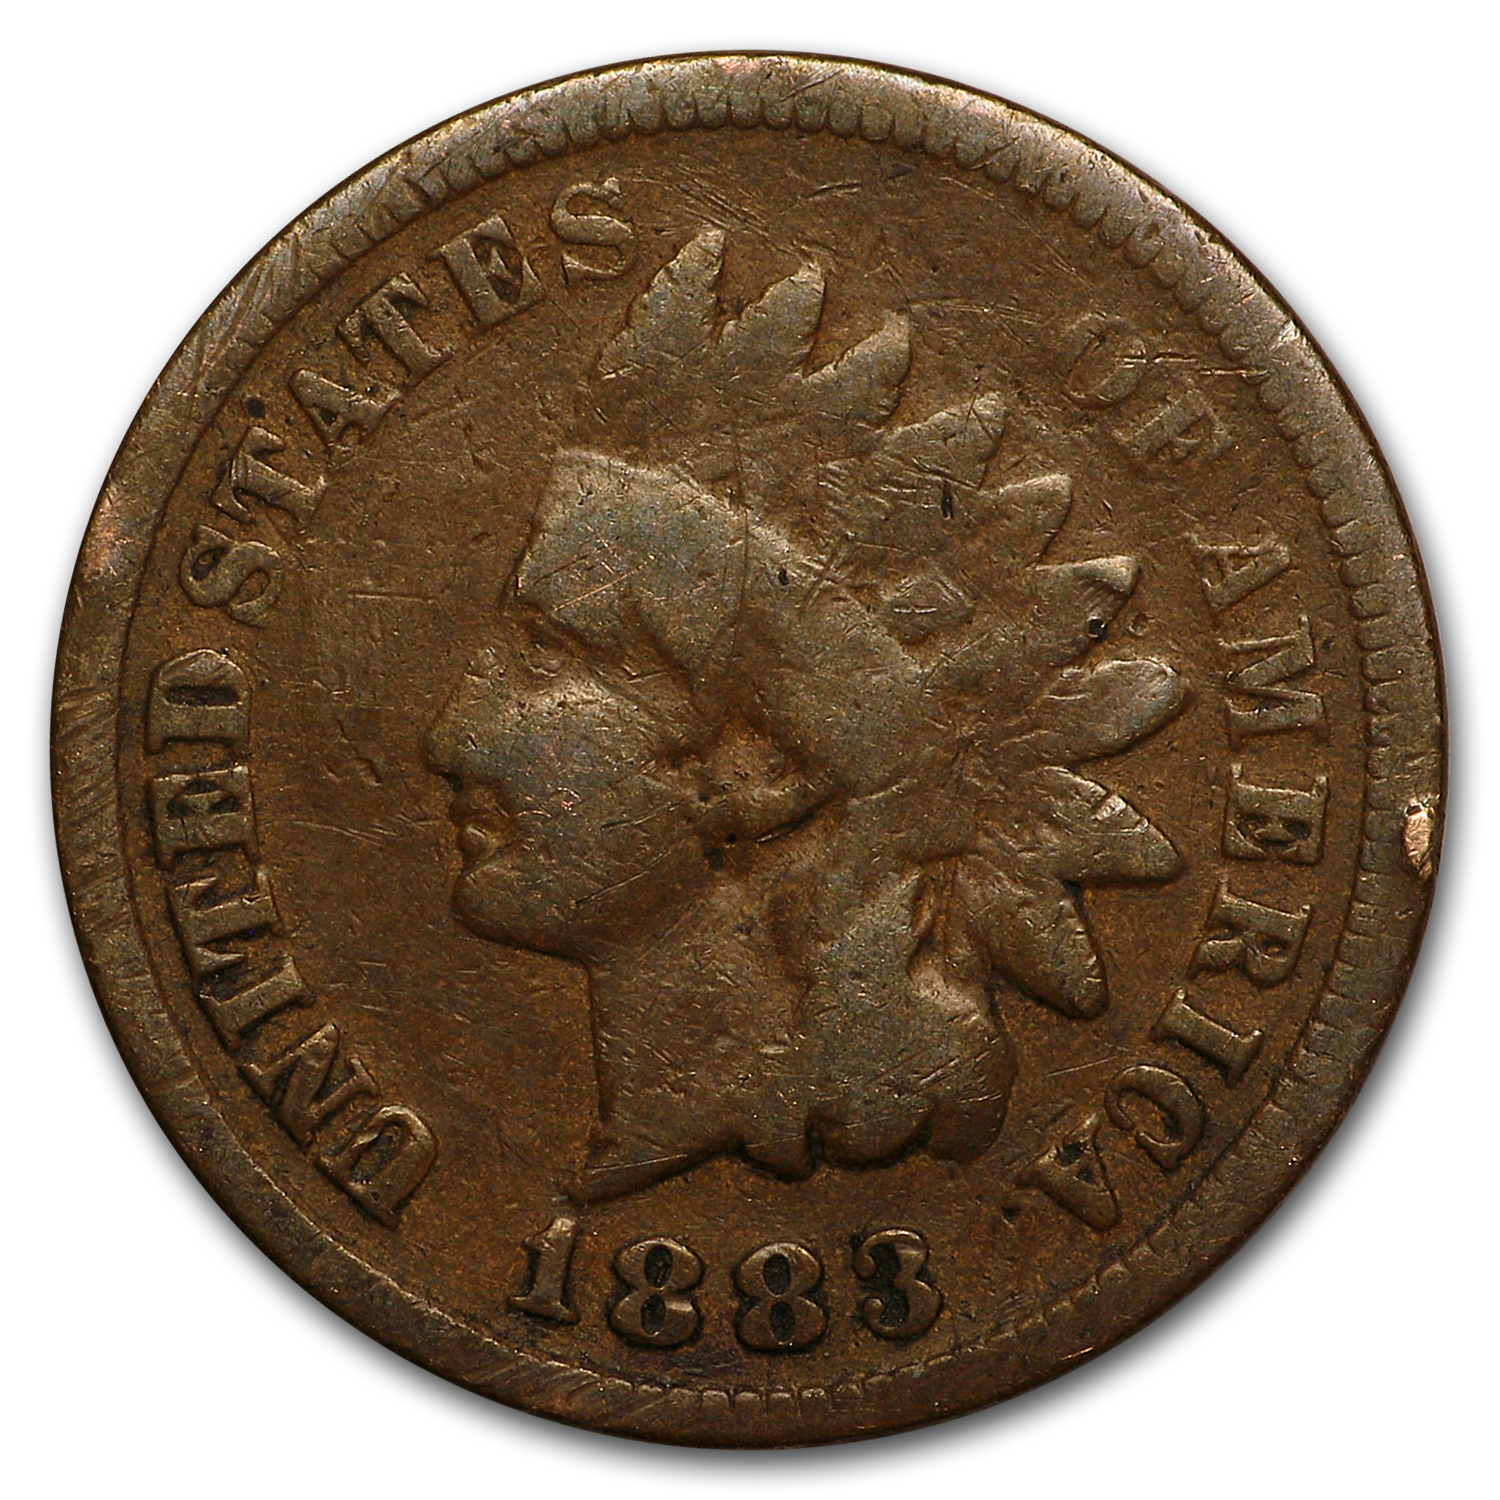 Buy 1883 Indian Head Cent Good+